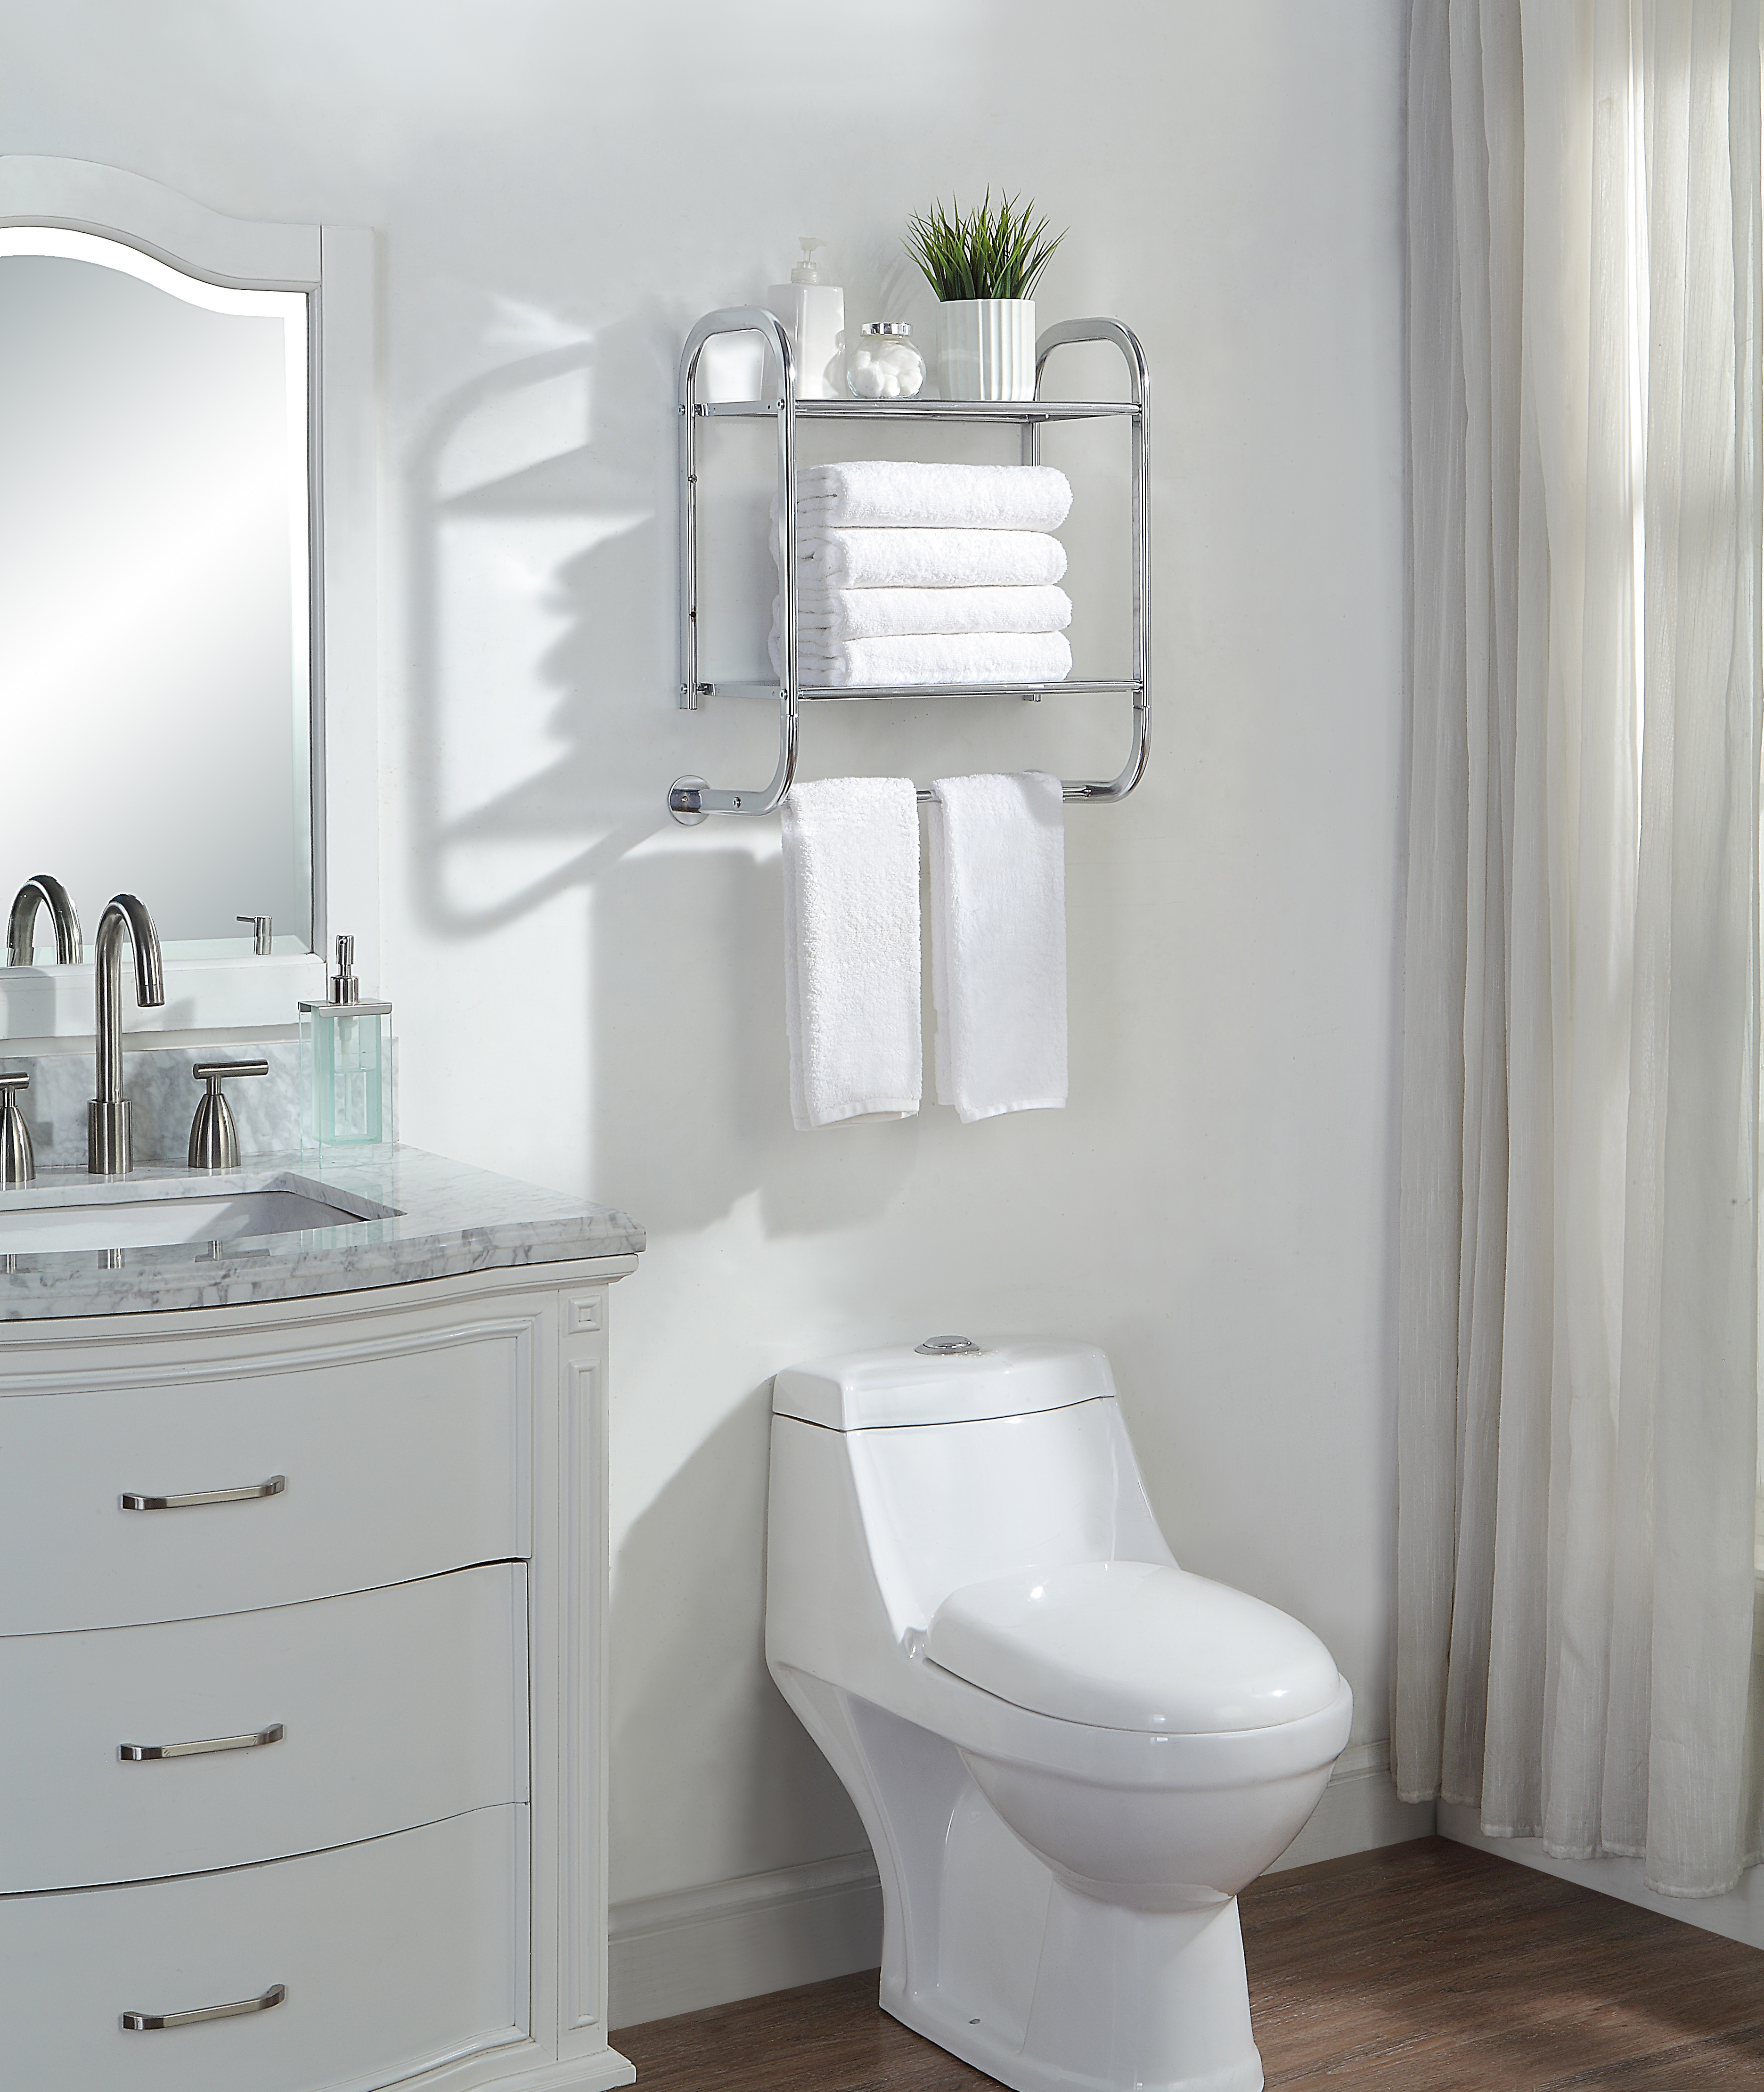 SunnyPoint Classic Square Bathroom Shelf, Tier Shelf with Towel Bar Wall - 5